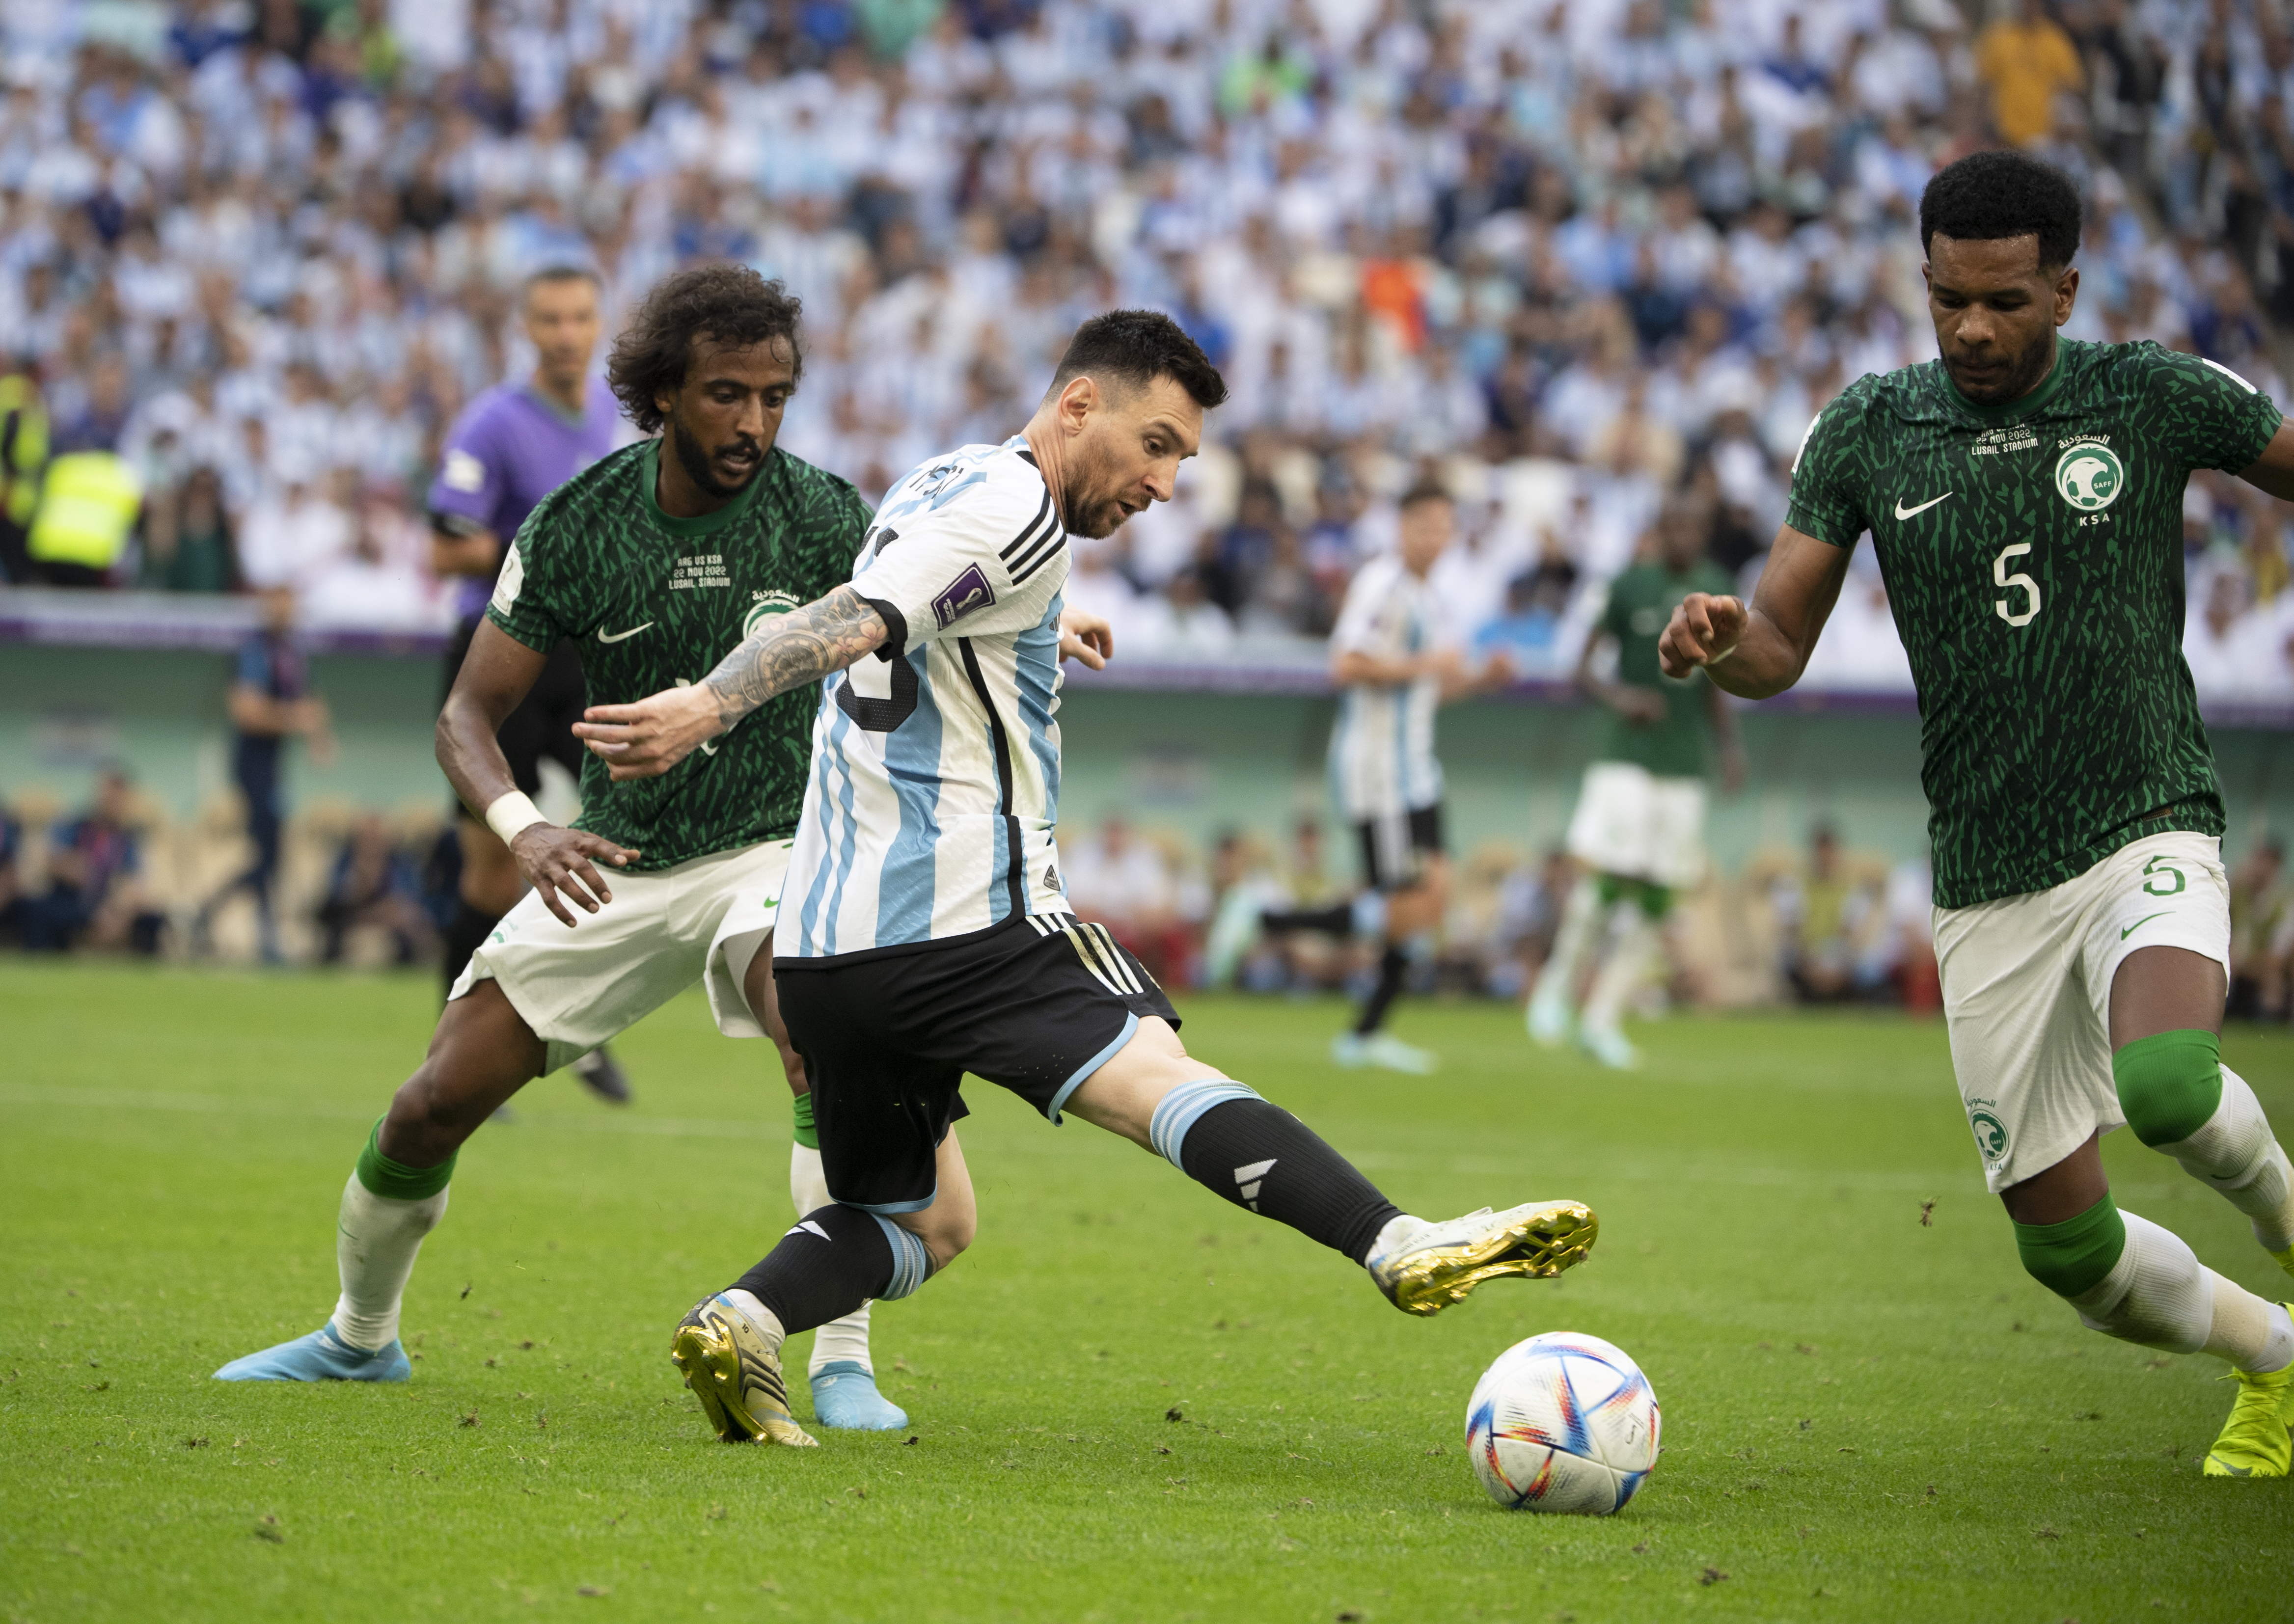 “Golpe mundial”: argentinos repercutem derrota para a Arábia Saudita